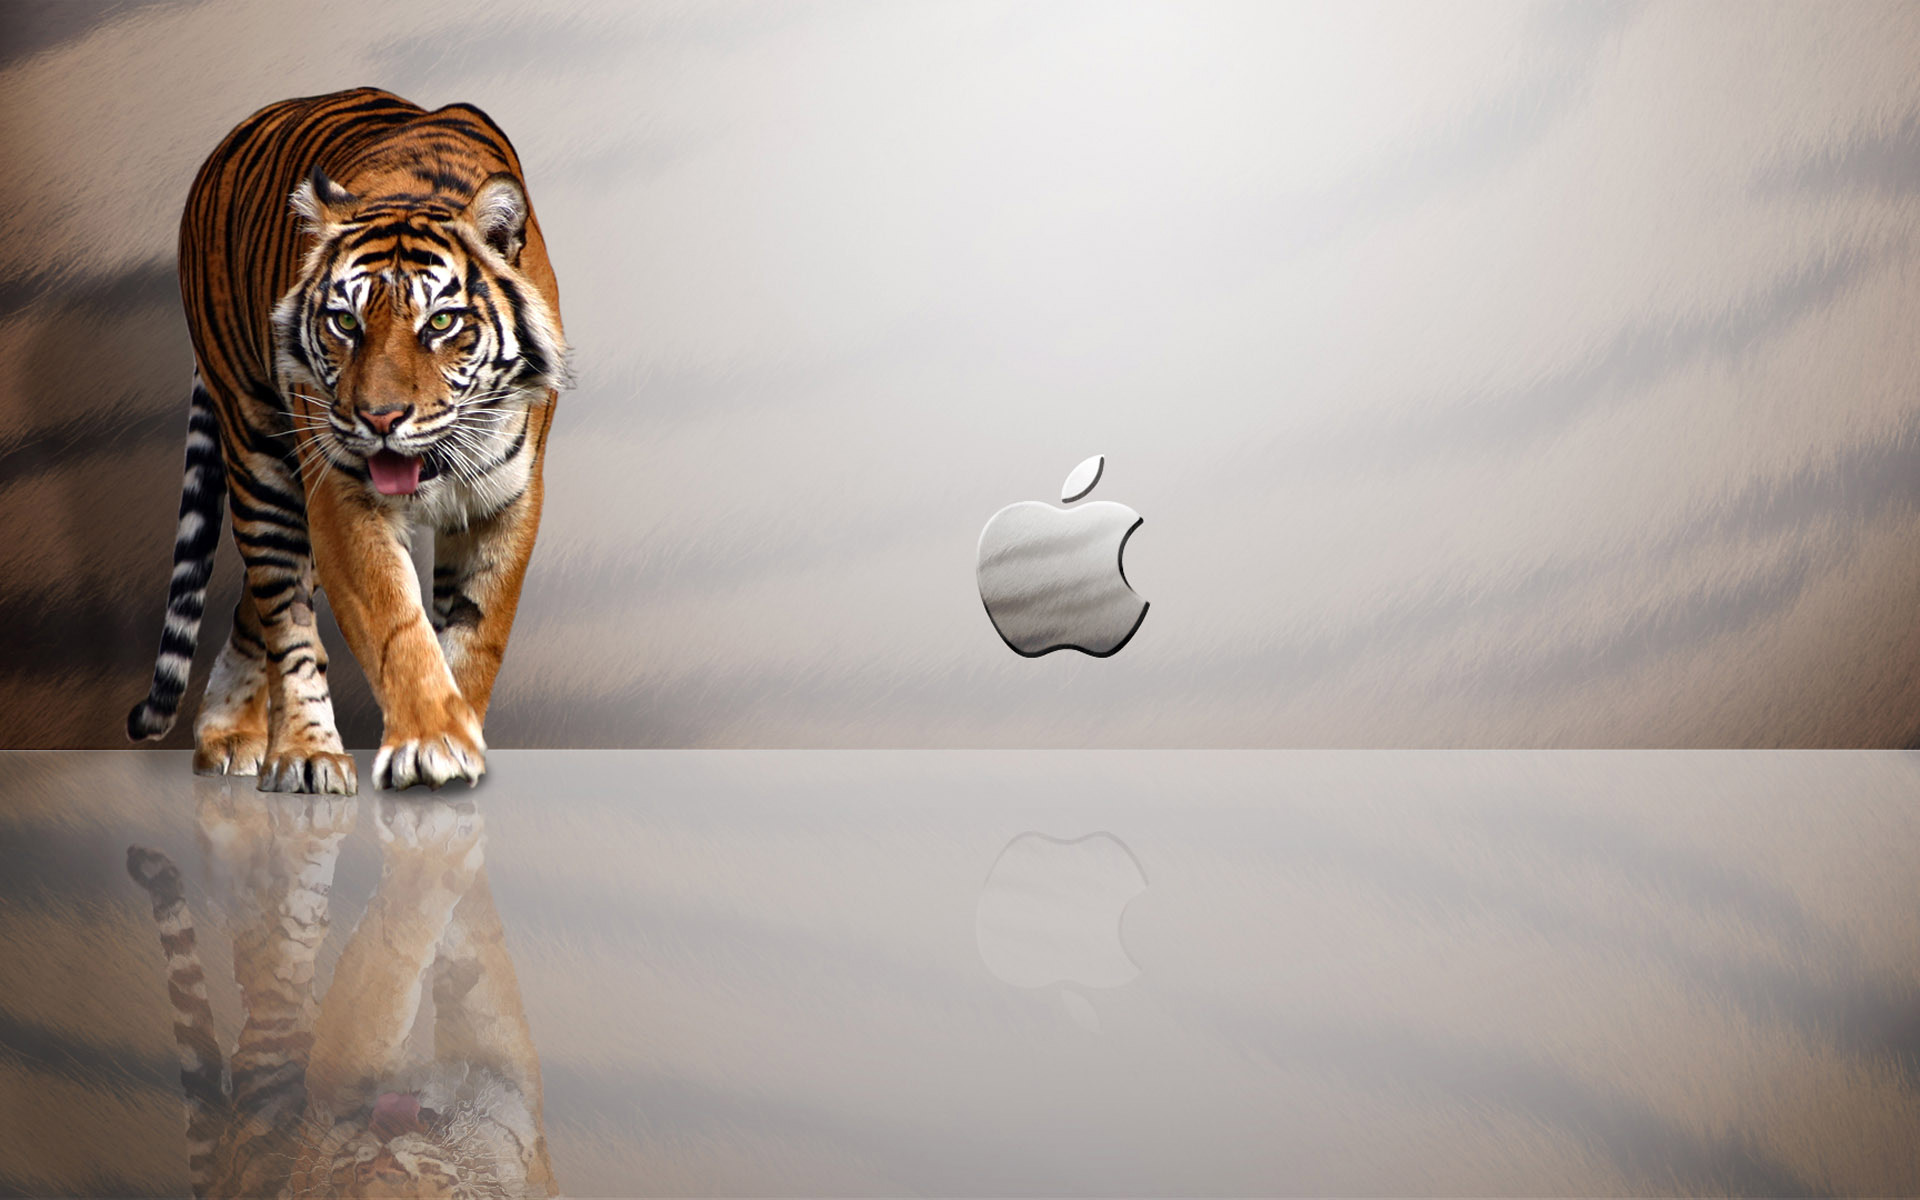 Apple Tiger Mac Os Desktop HD Wallpaper And Make This For